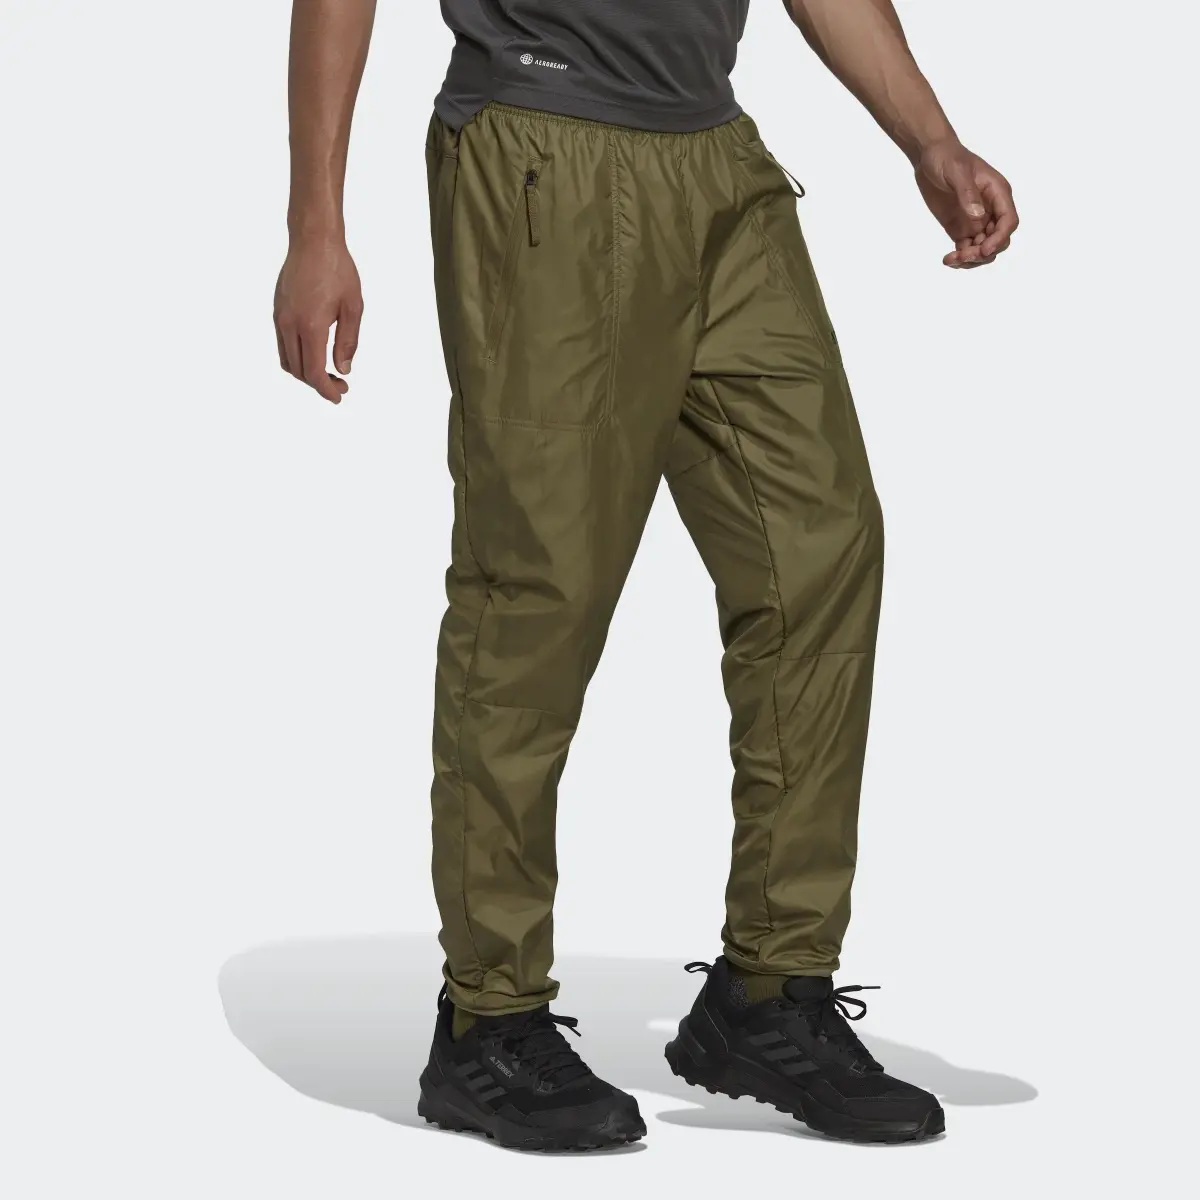 Adidas Multi Primegreen Windfleece Pants. 3